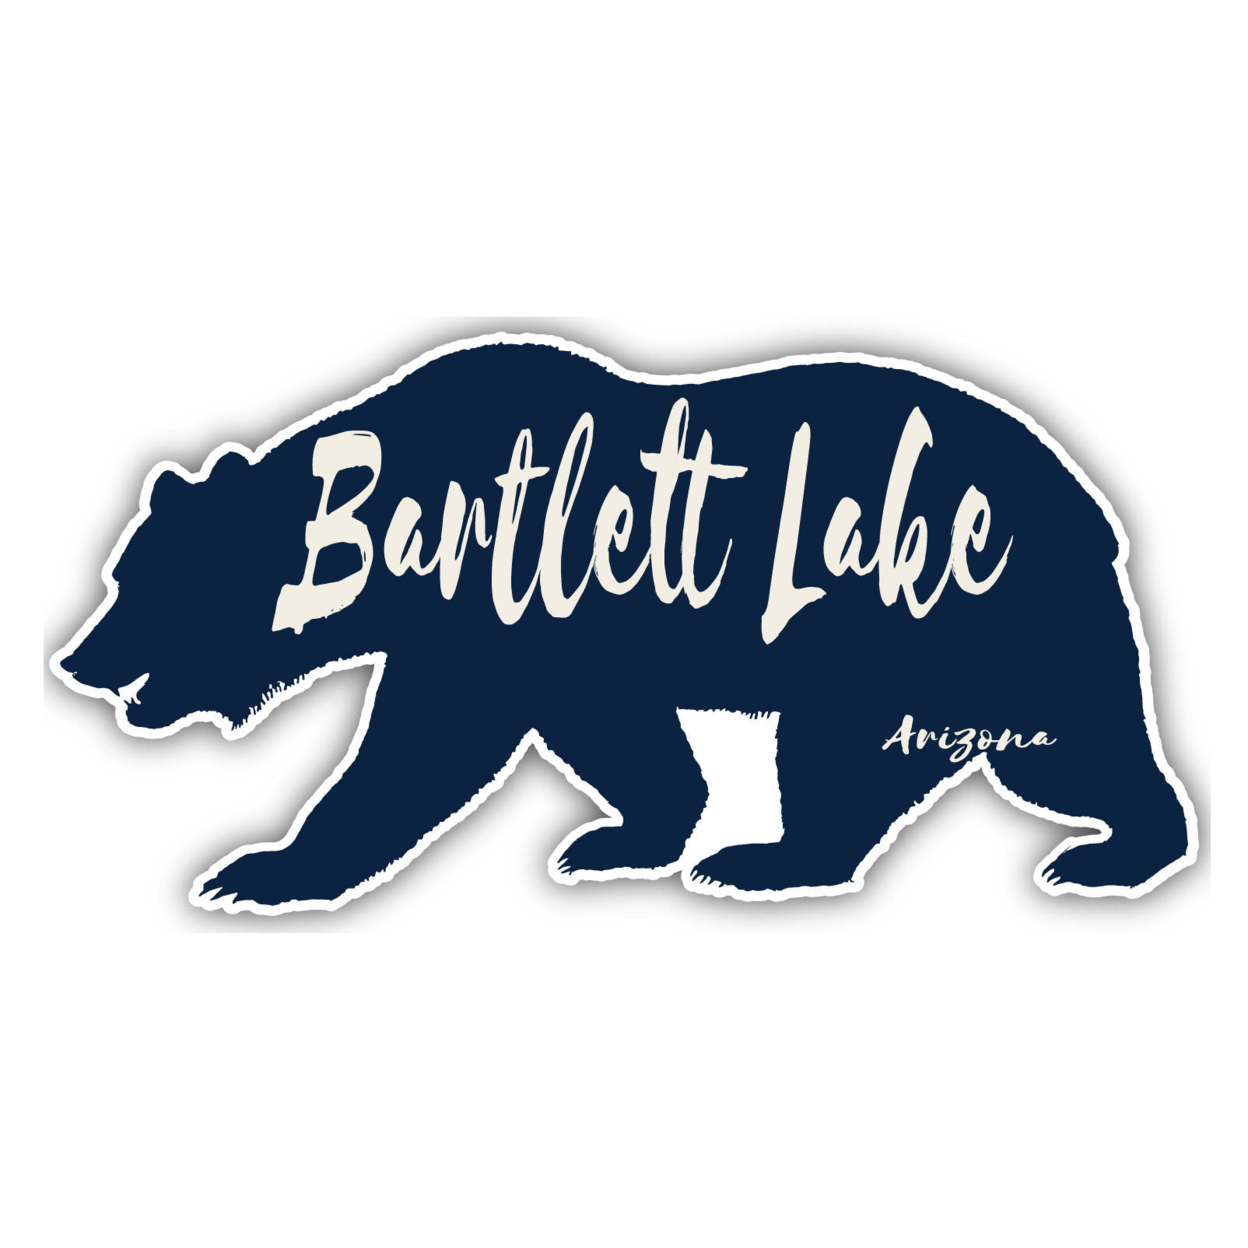 Bartlett Lake Arizona Souvenir Decorative Stickers (Choose Theme And Size) - Single Unit, 2-Inch, Bear